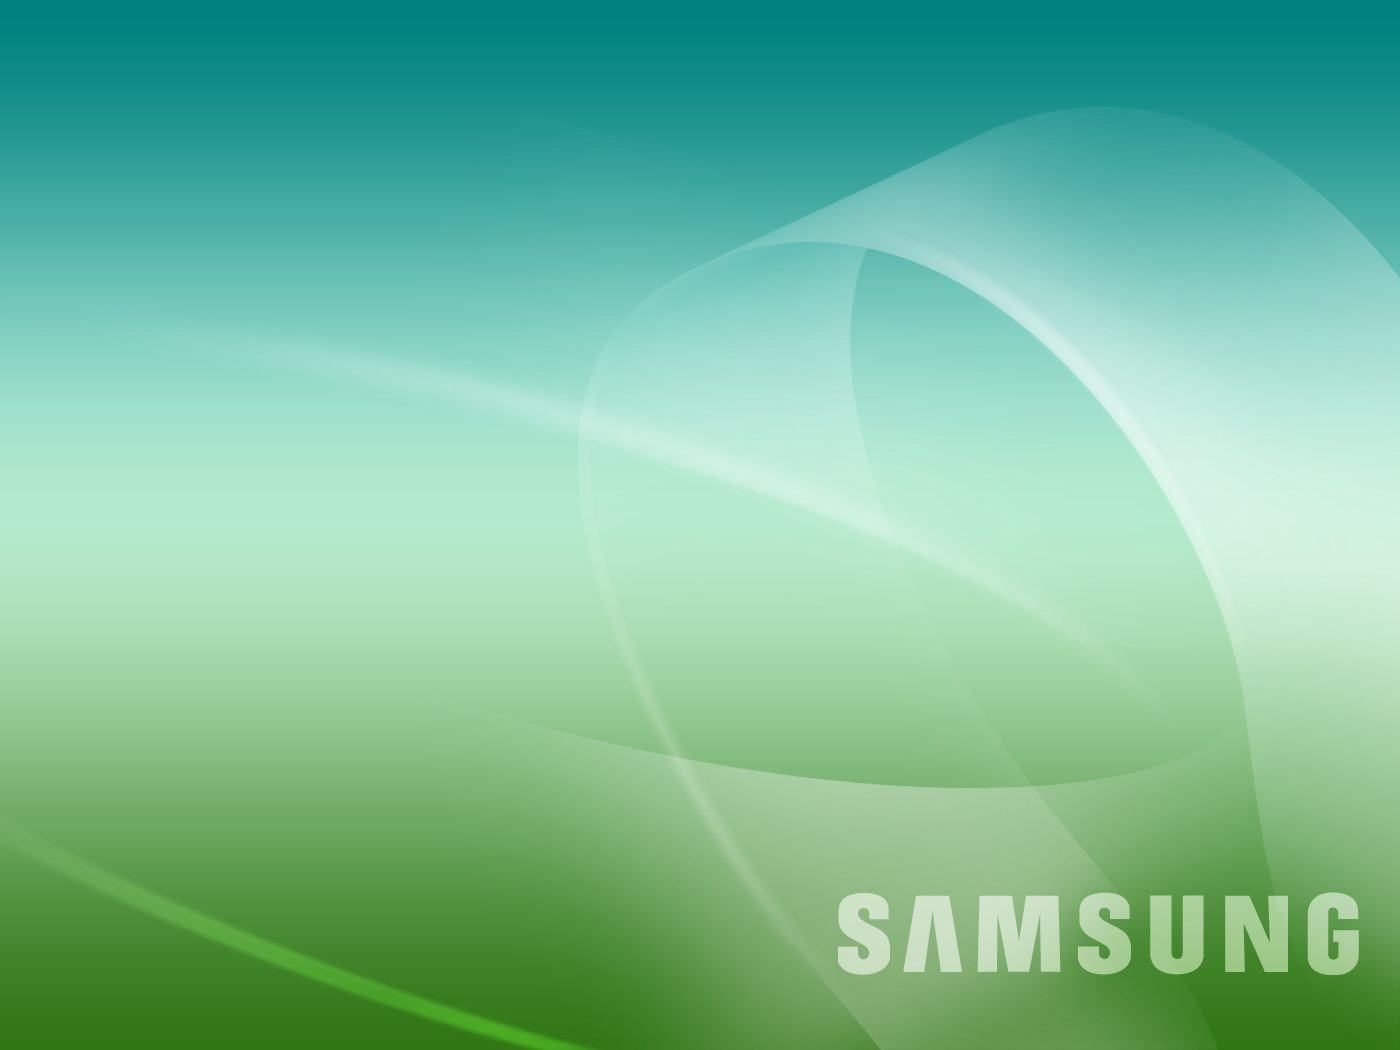 Samsung Laptop Wallpapers Free Download Free Wallpapers   Ecro